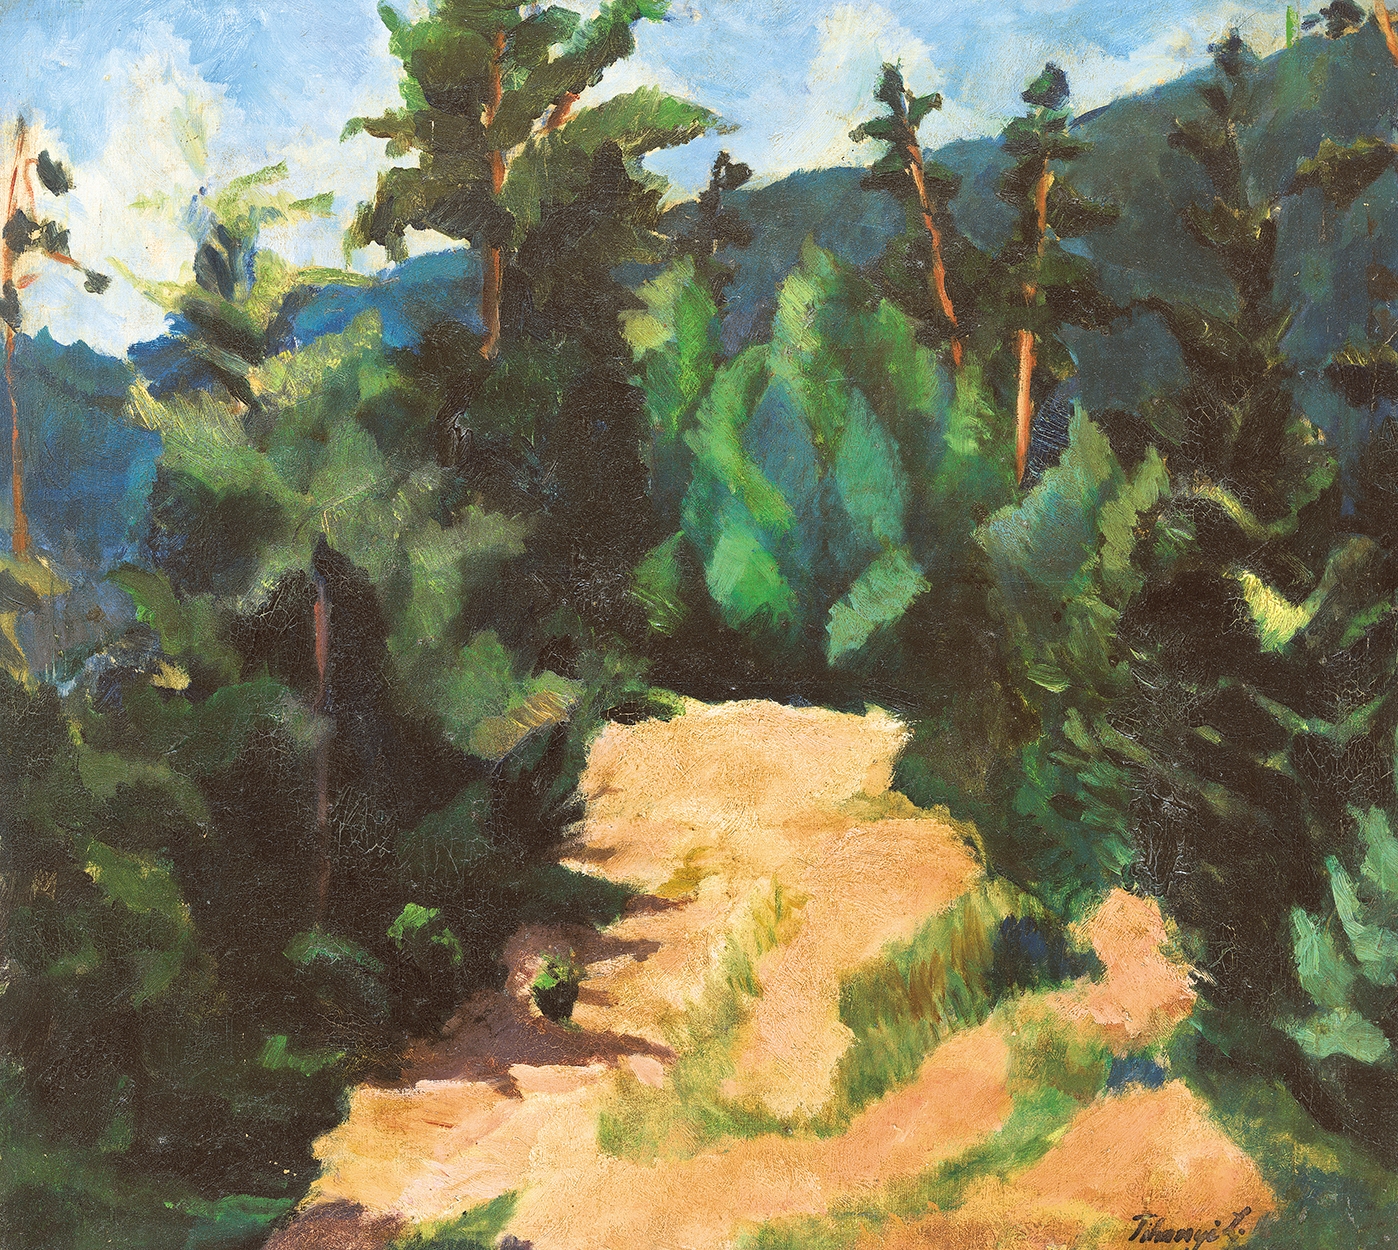 Tihanyi Lajos (1885-1938) Landscape with Hills (Landscape of Trencsén), 1911